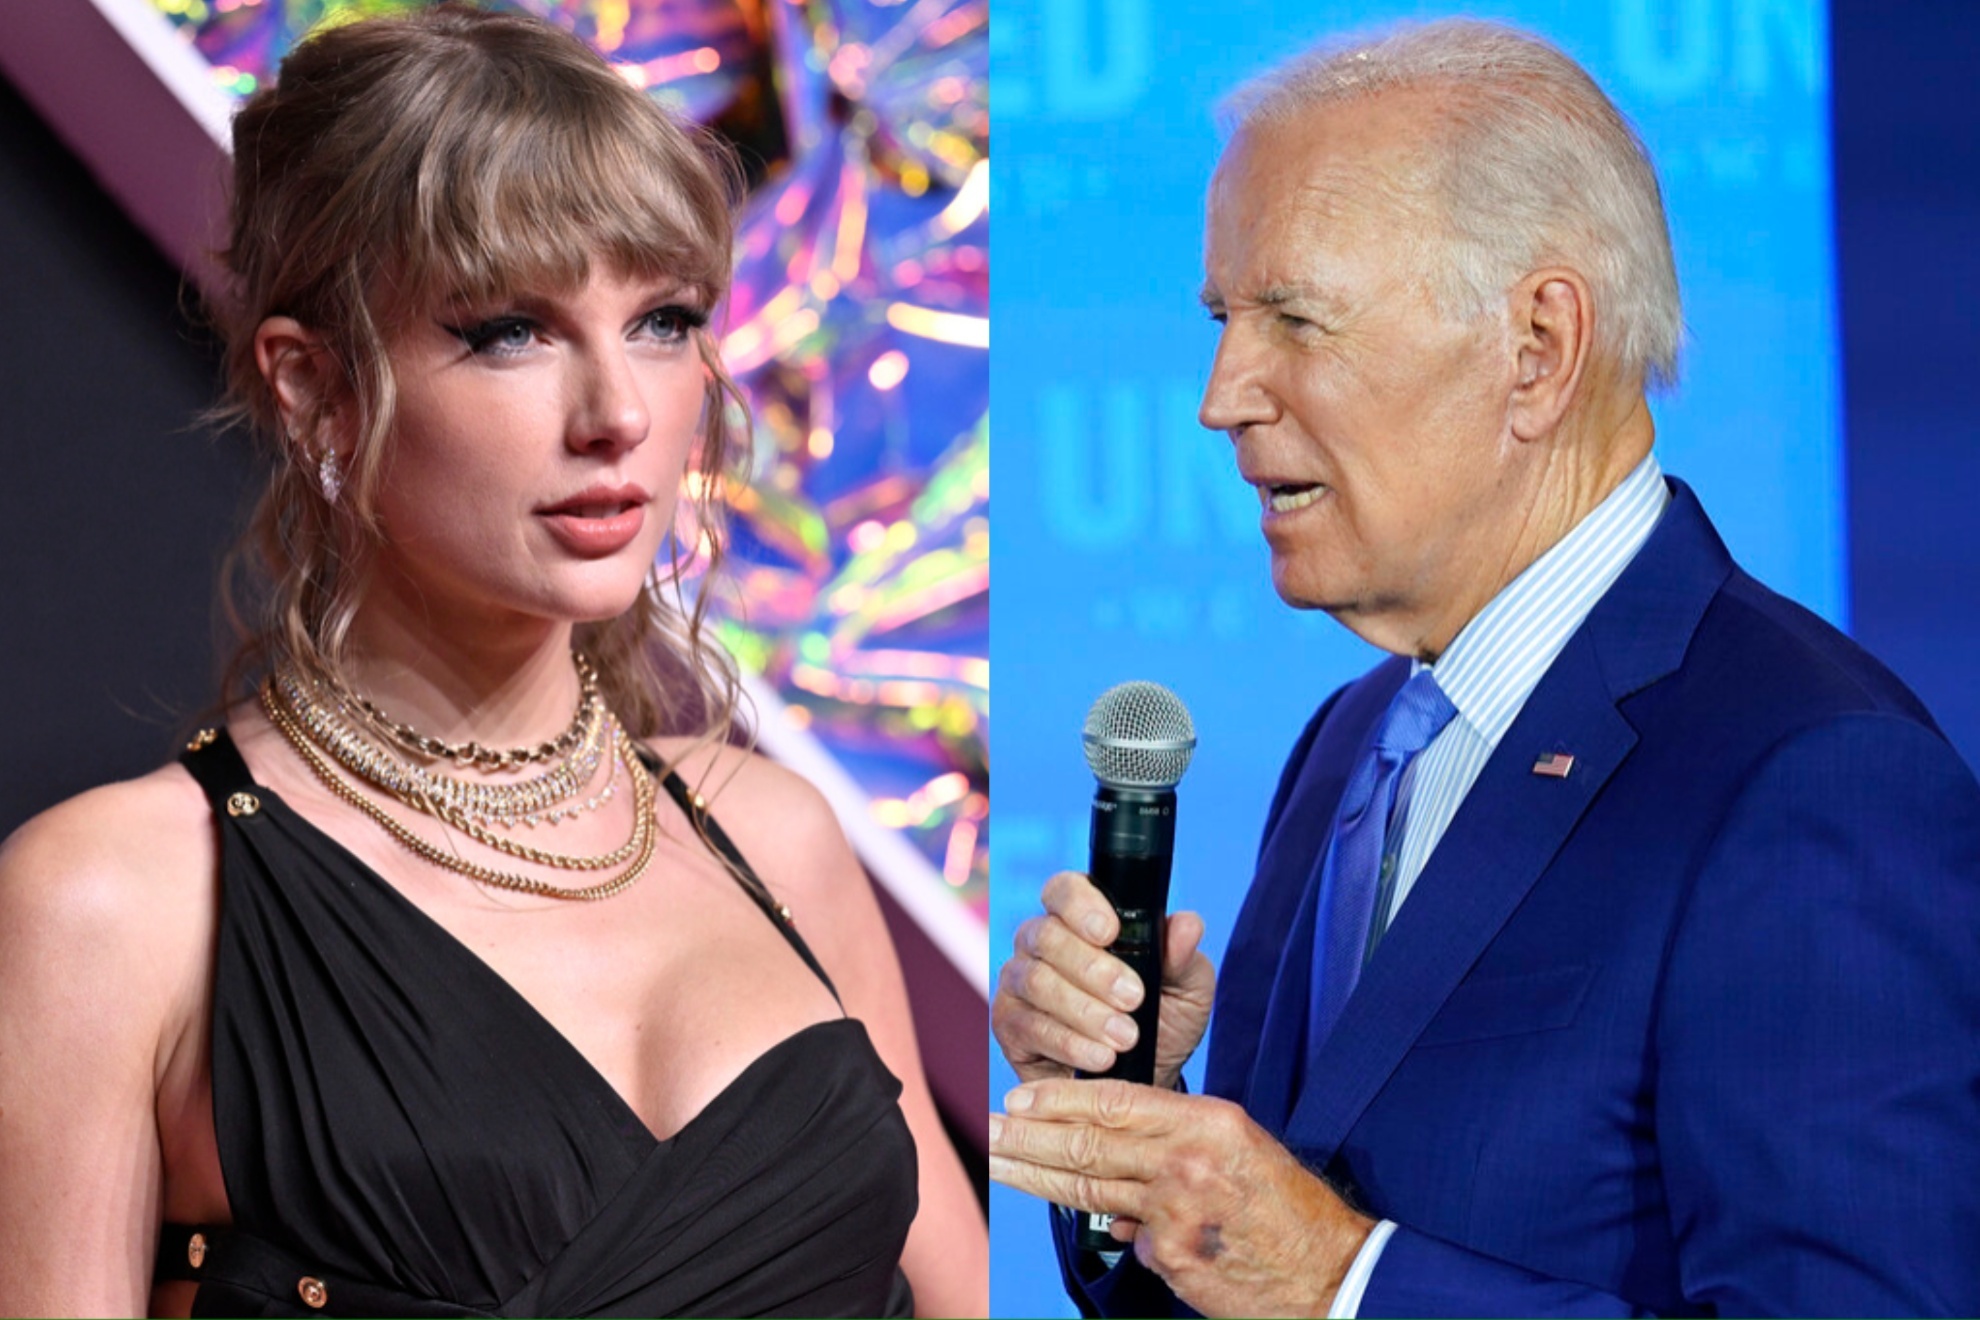 Taylor Swift endorsed Joe Biden in the 2020 campaign.